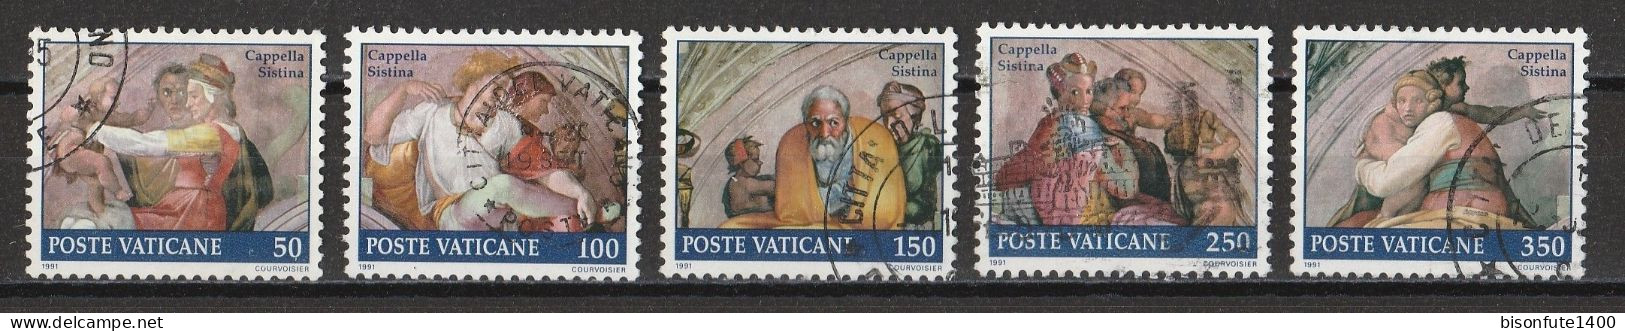 Vatican 1991 : Timbres Yvert & Tellier N° 891 - 892 - 893 - 894 - 895 - 897 - 898 - 899 - 900 Et 901 Oblitérés. - Used Stamps